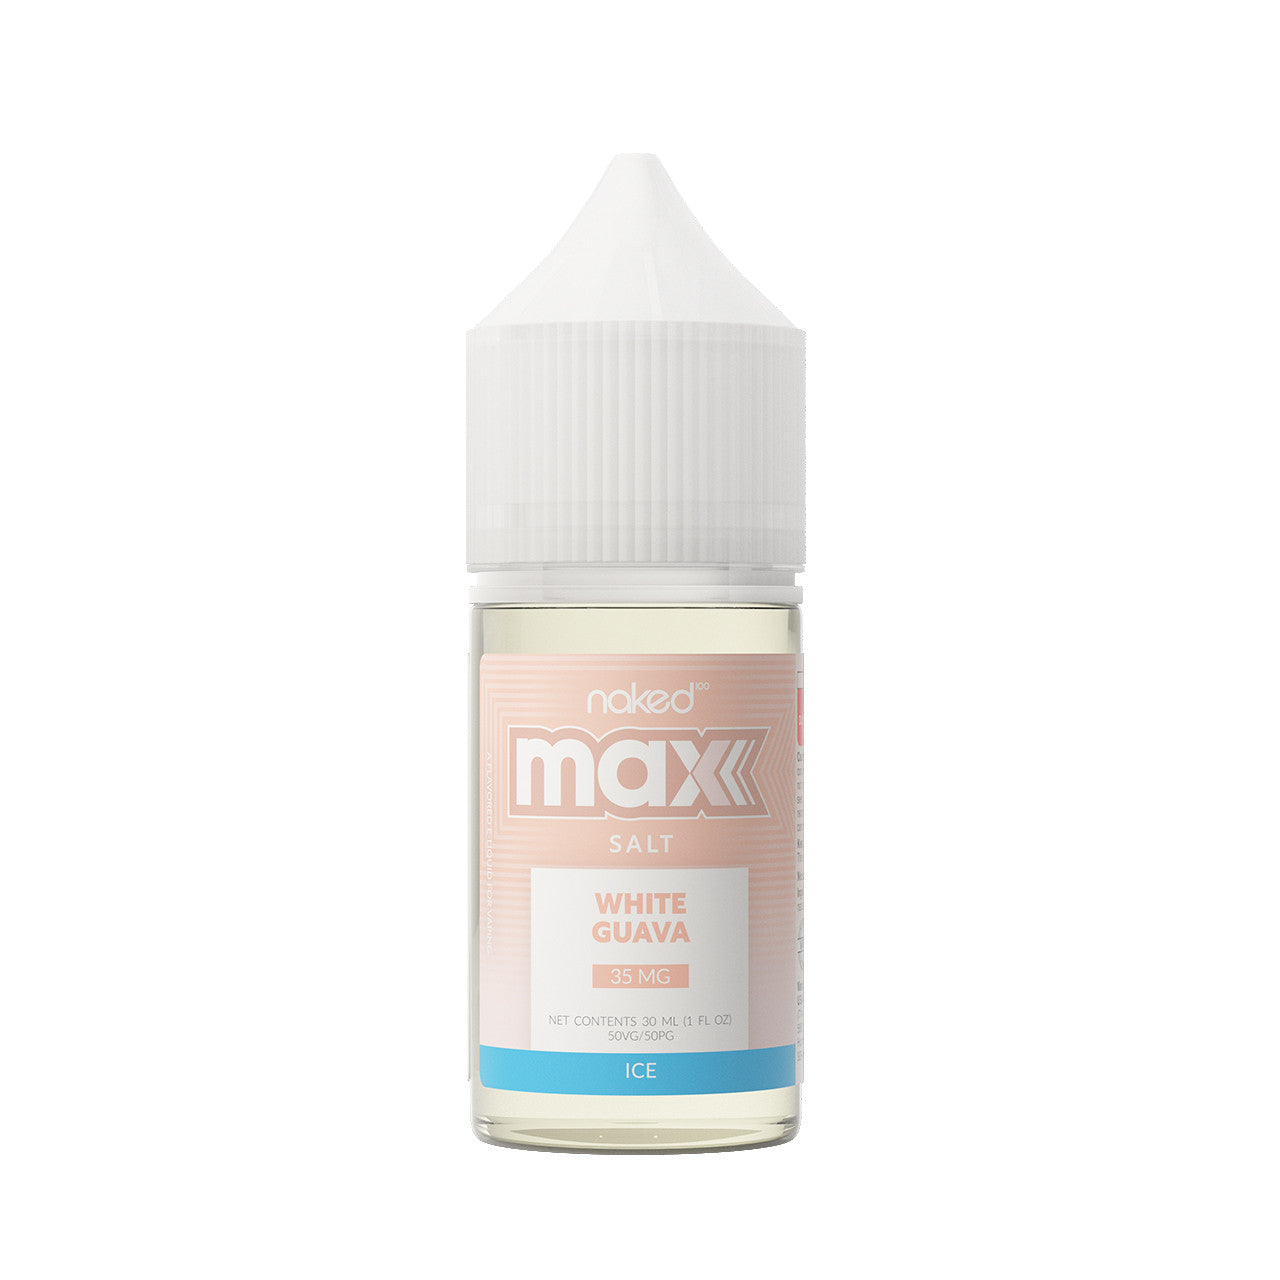 Naked Max Salt Nic - White Guava Ice